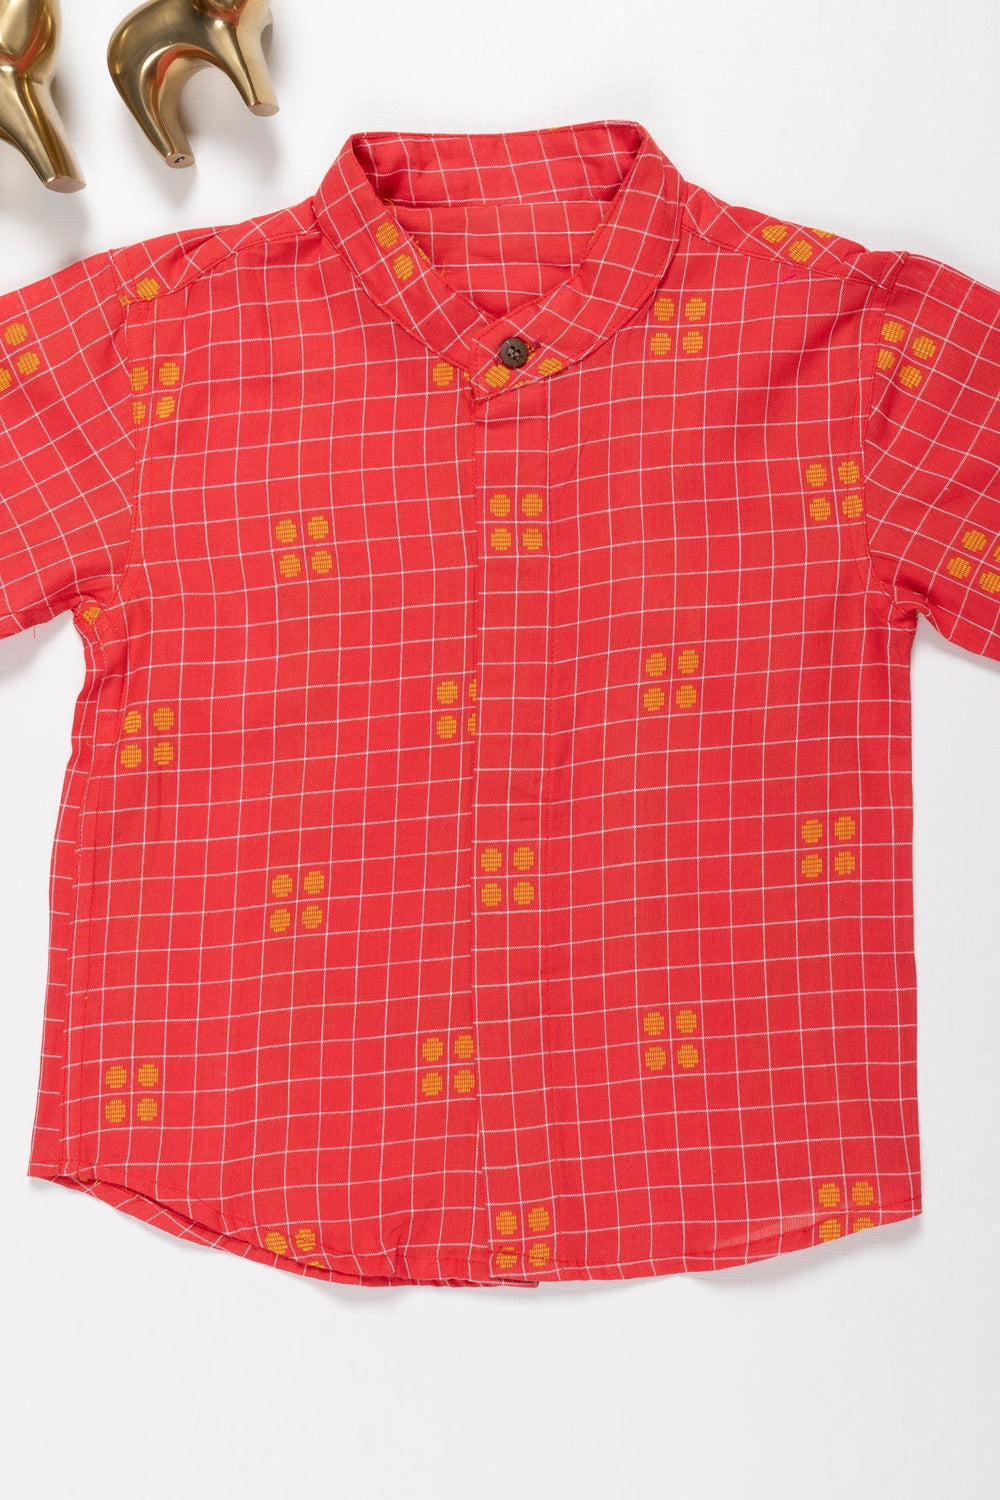 The Nesavu Boys Cotton Shirt Boys Red Checked Cotton Shirt with Distinctive Patterns Nesavu Buy Boys' Red Checked Short Sleeve Cotton Shirt | Vibrant Kids' Casual Wear | The Nesavu